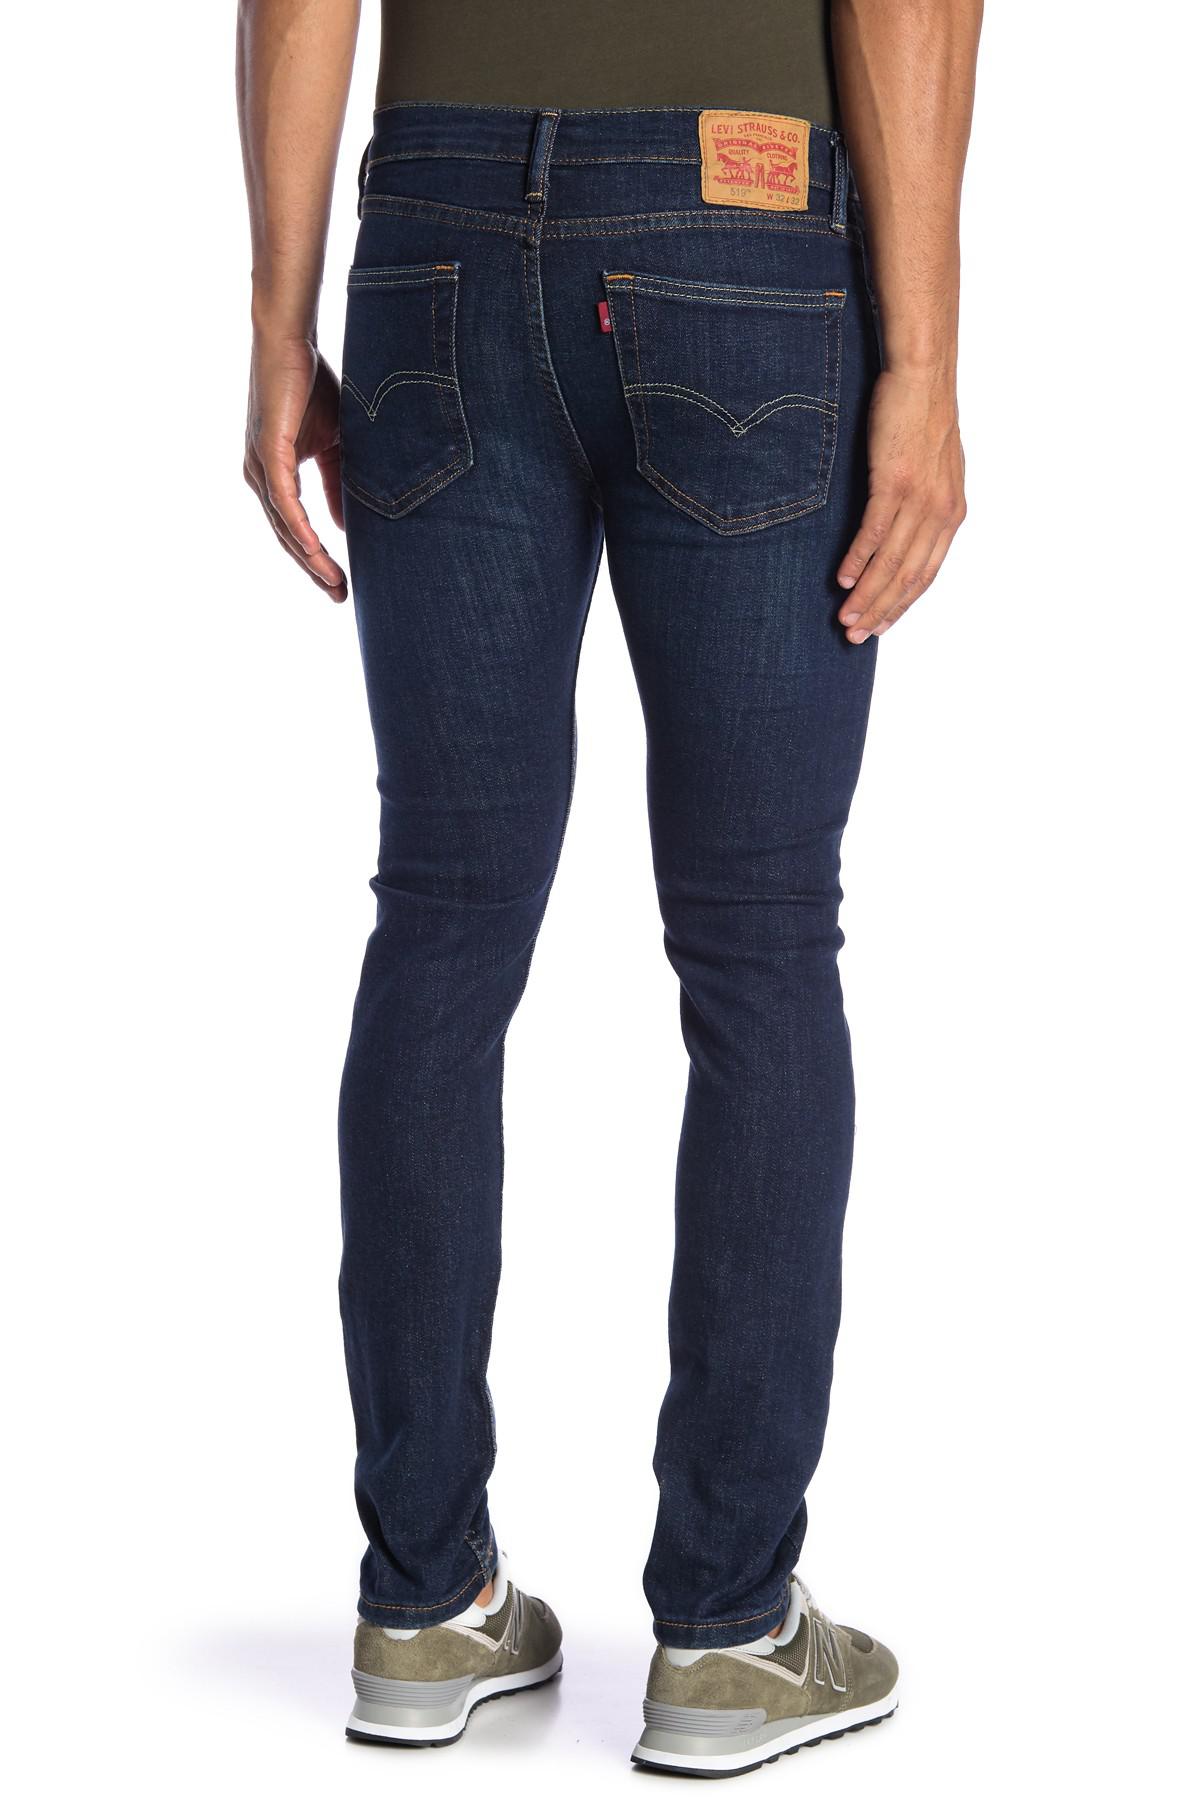 Levi's Denim 519 Extreme Skinny Fit Jeans - 30-34